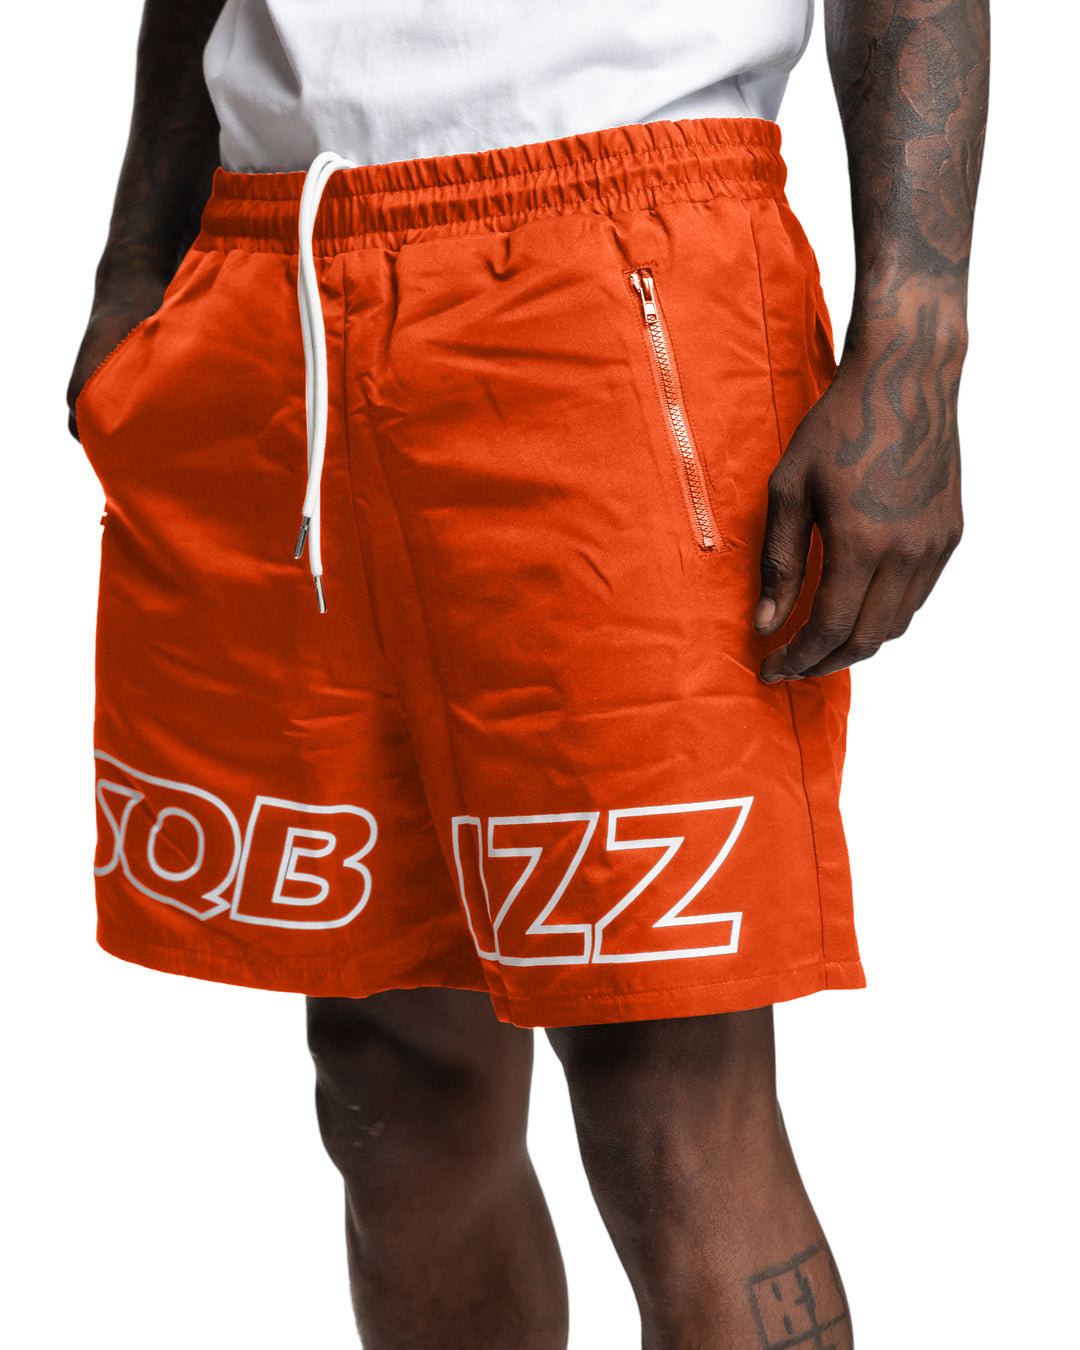 Sideline Shorts in Orange/White